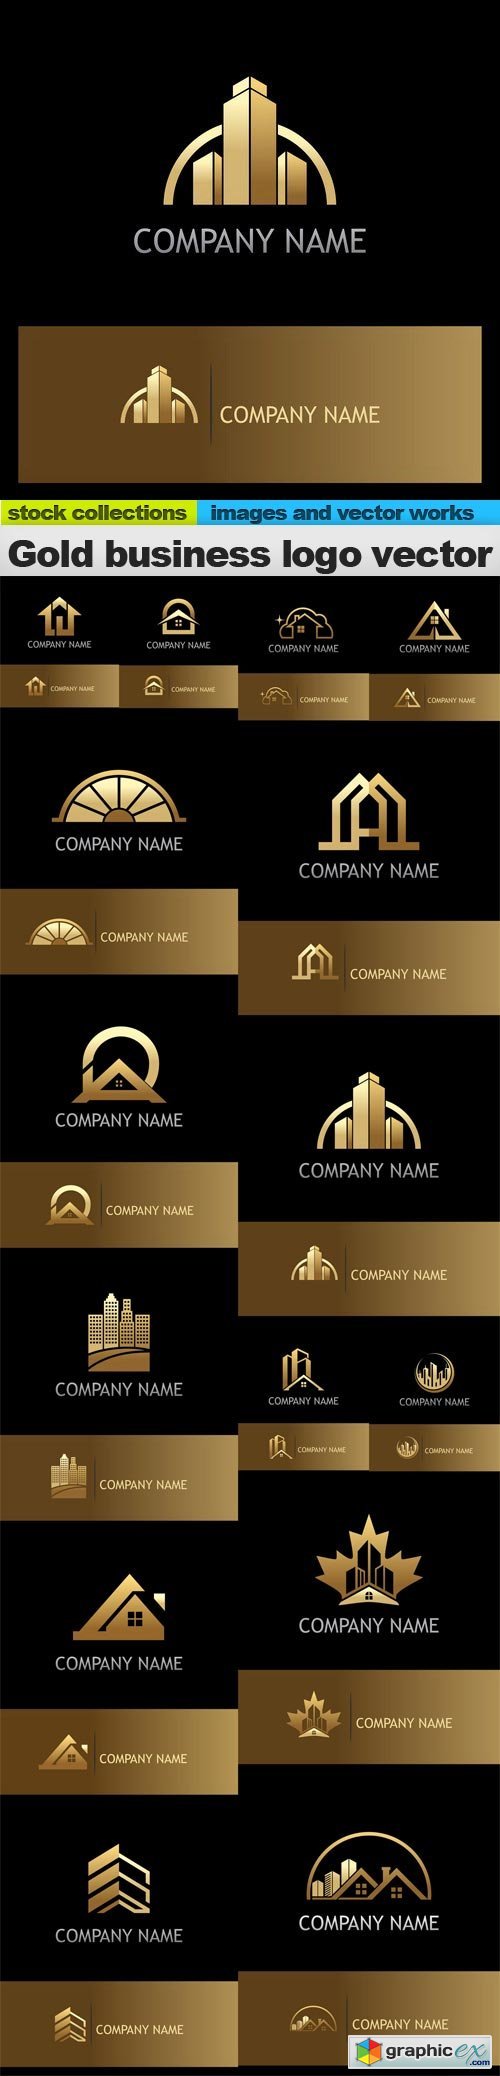 Gold business logo vector, 15 x EPS